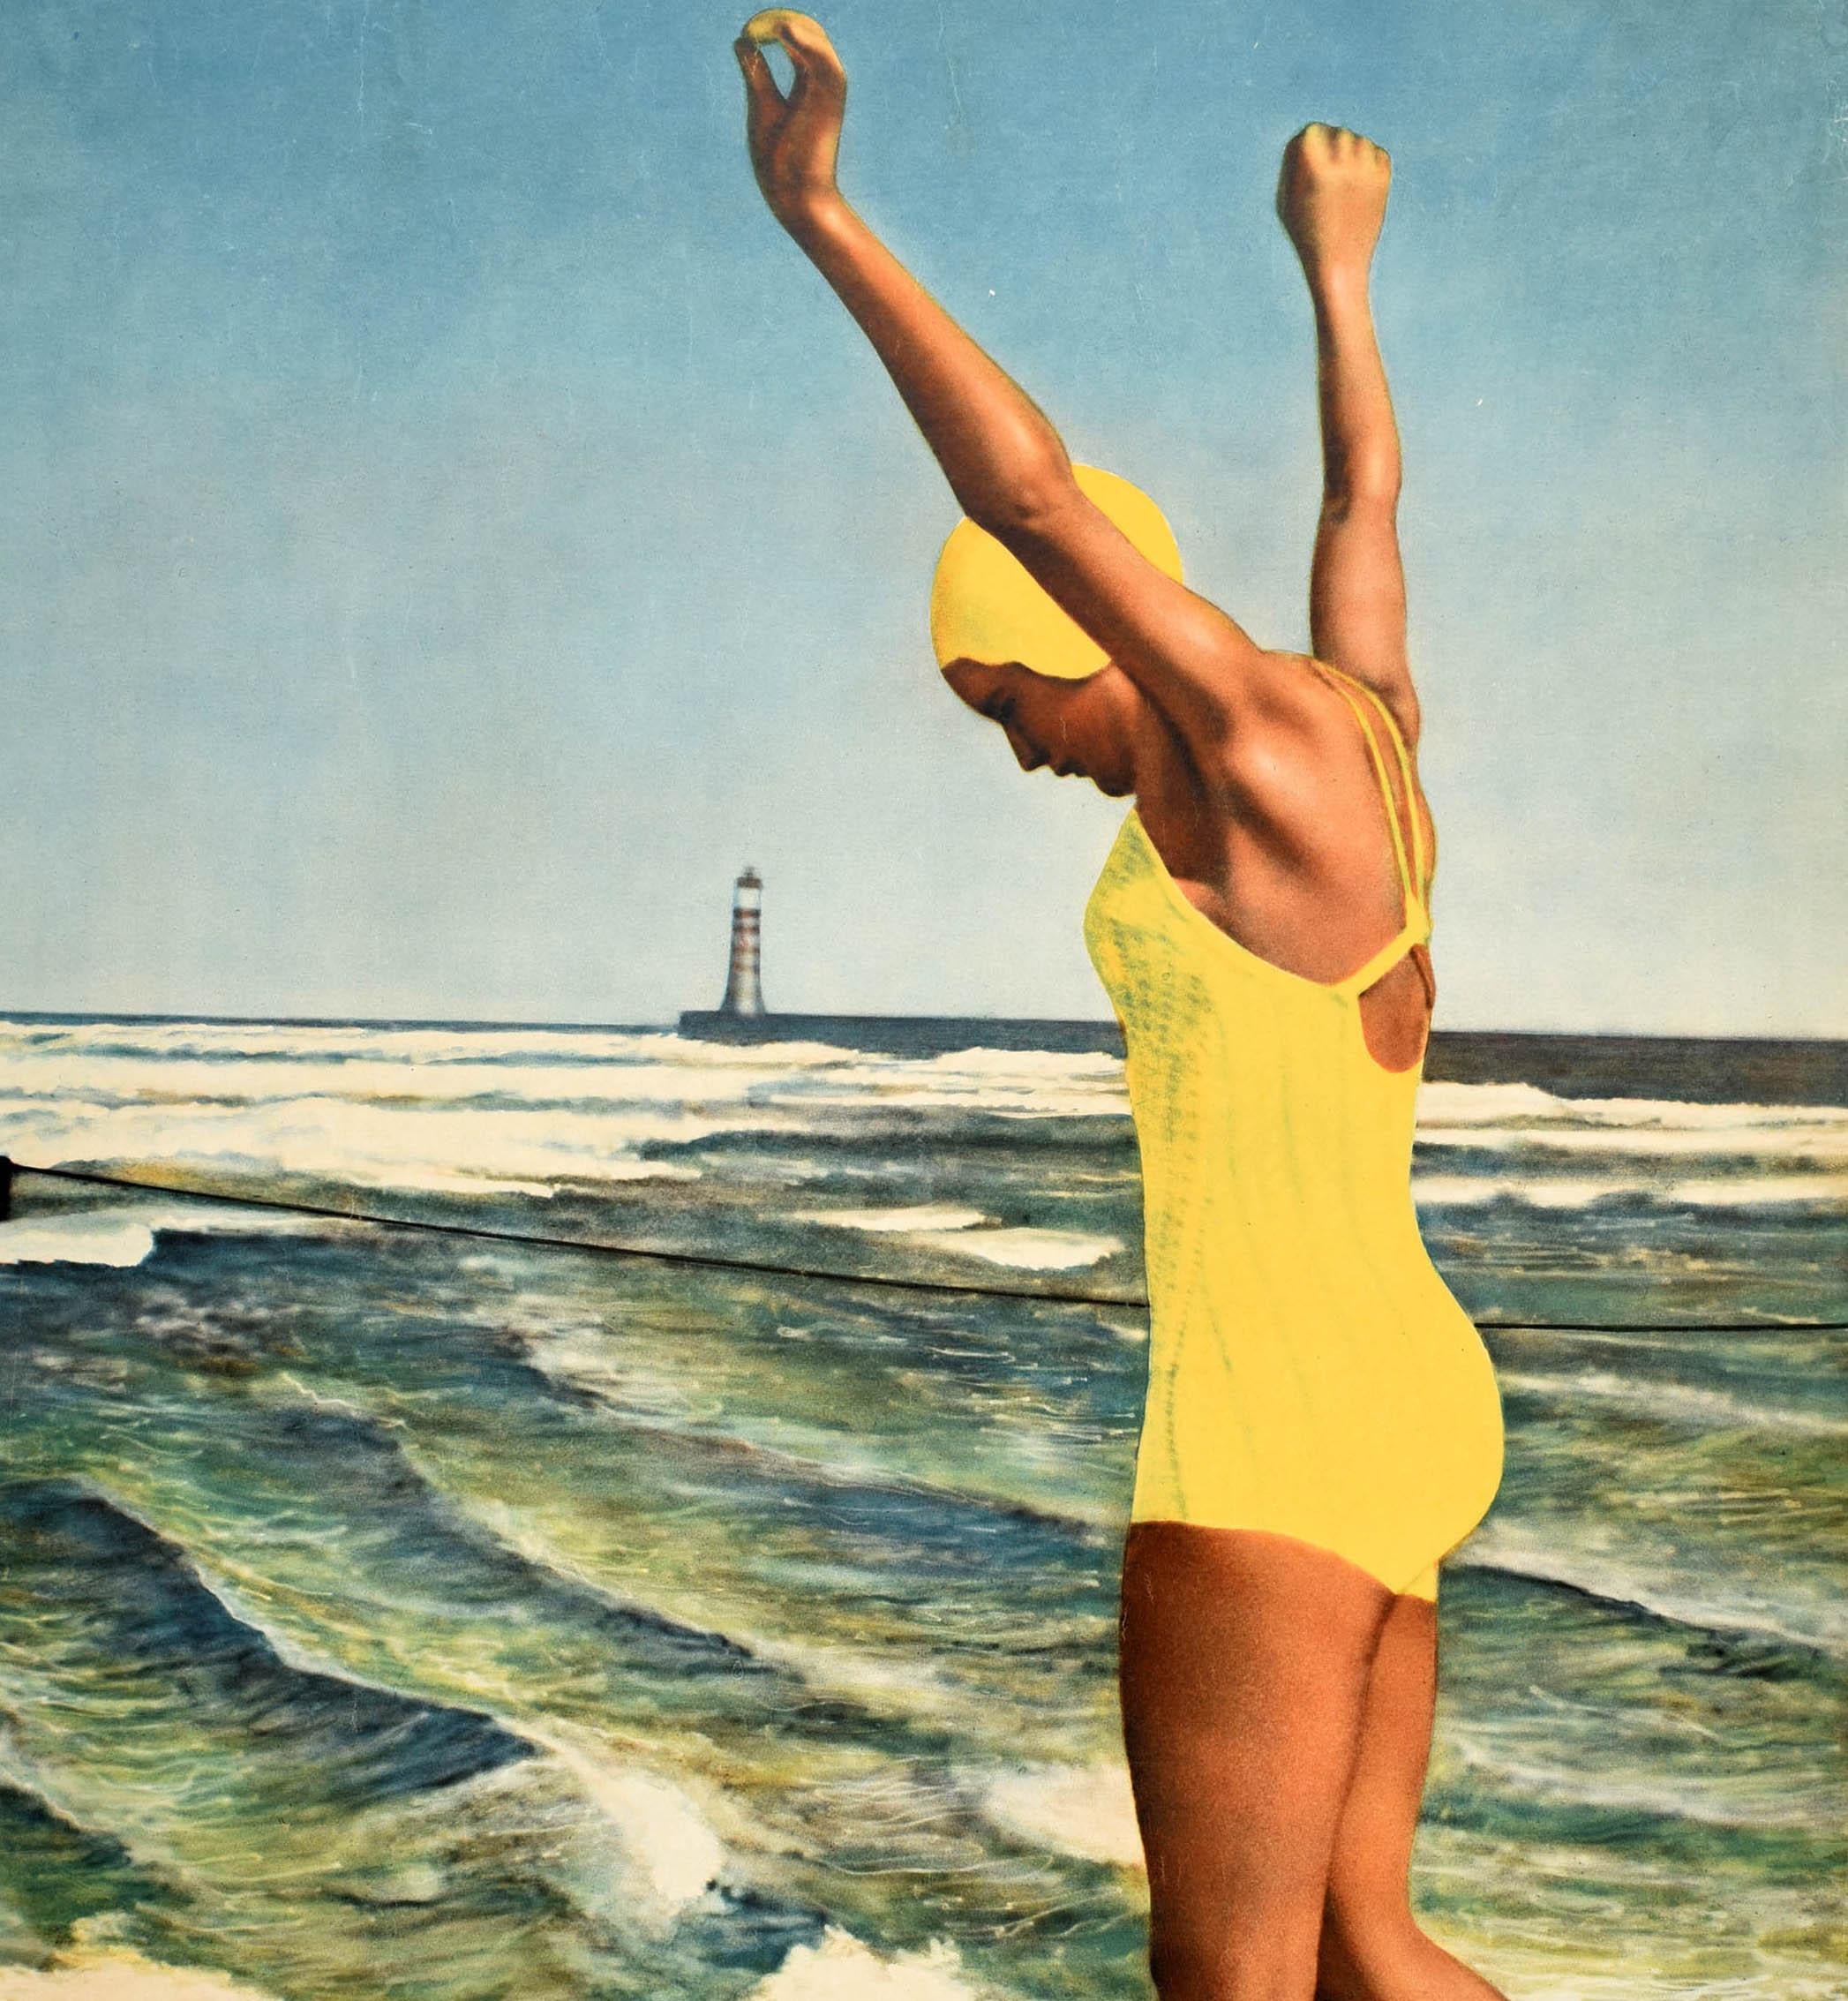 Original Vintage Travel Poster Sunny Holiday On The German Coast Sea Design Art - Print by E. Schneider